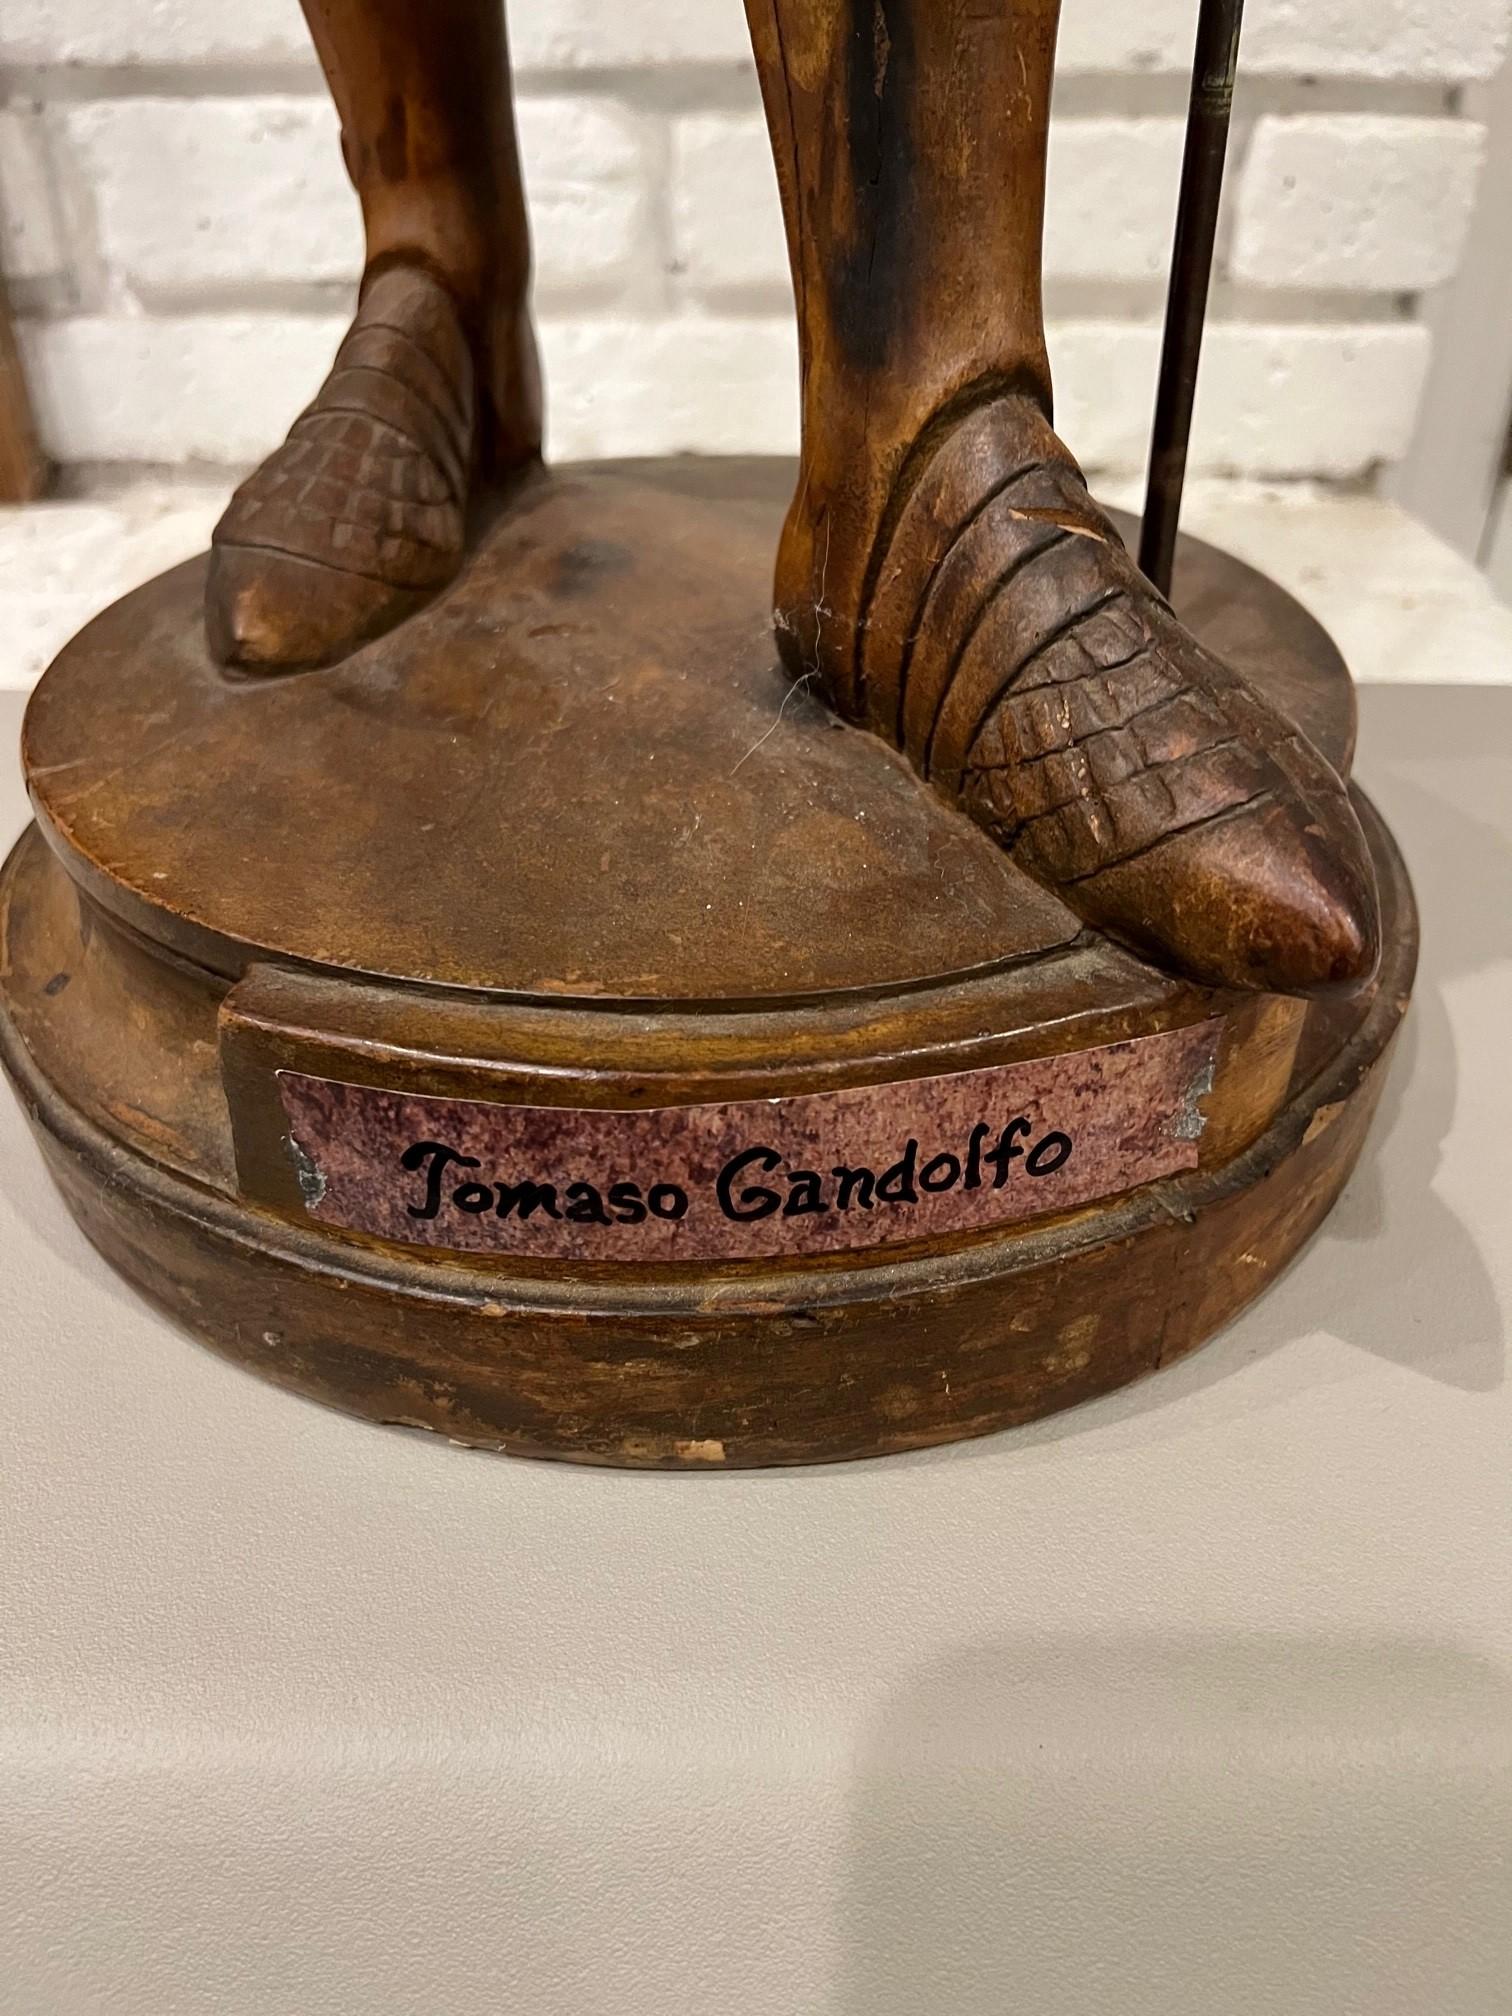 Vintage Terracotta Statue of a Knight in Armor Tomaso Gandolfo   For Sale 2